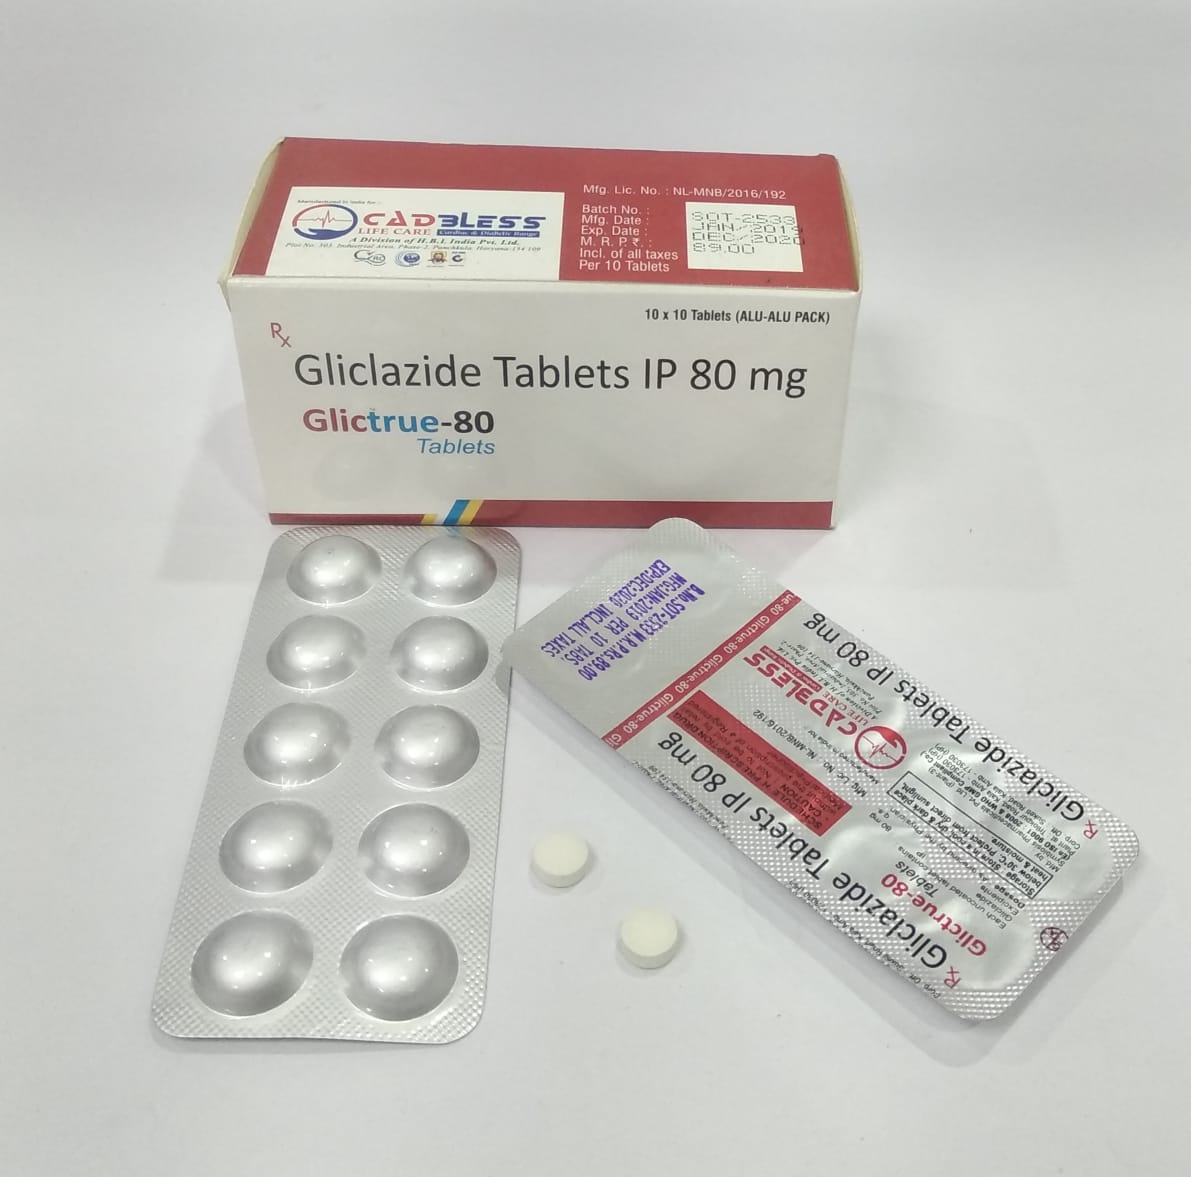 Gliclazide Tablets Range